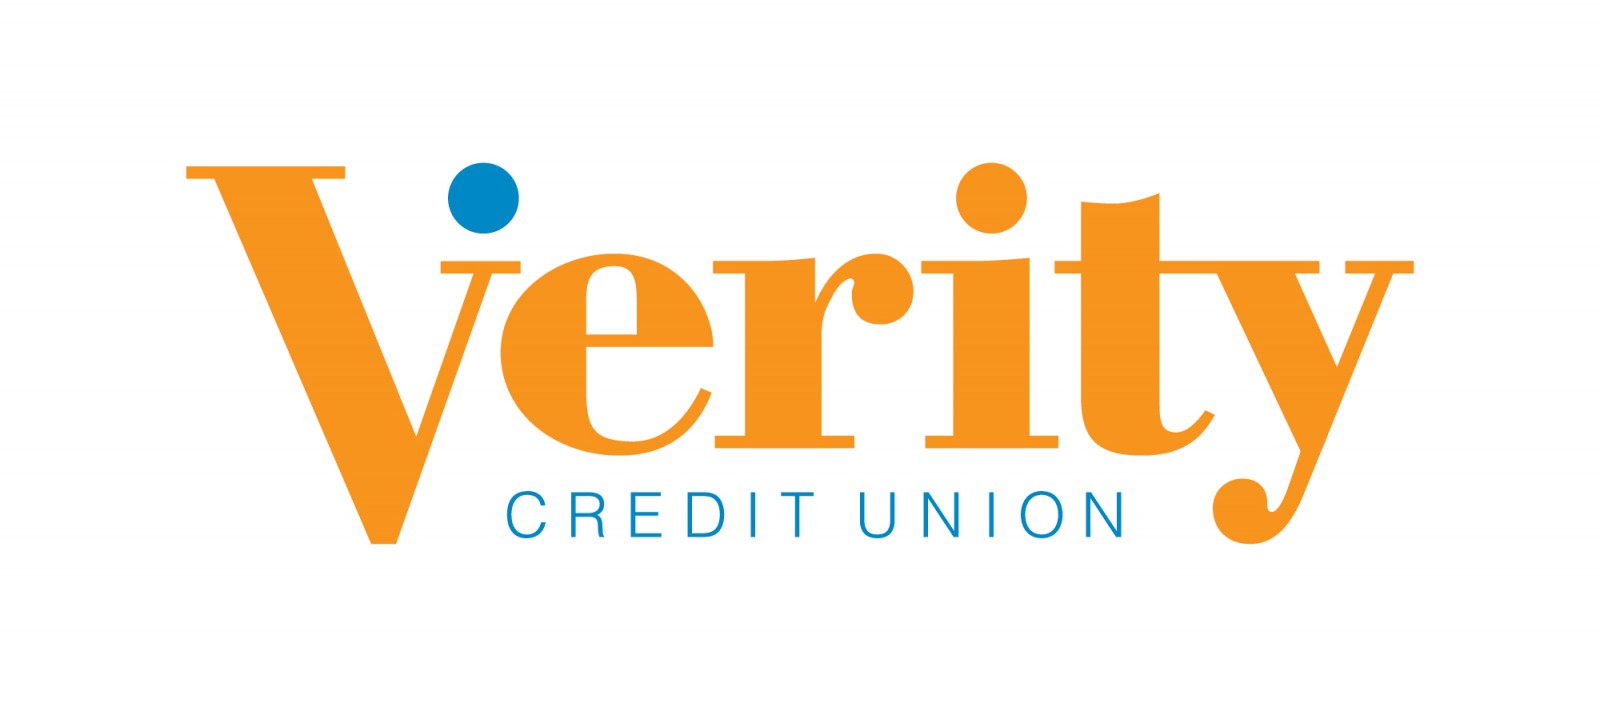 Verity Credit Union 